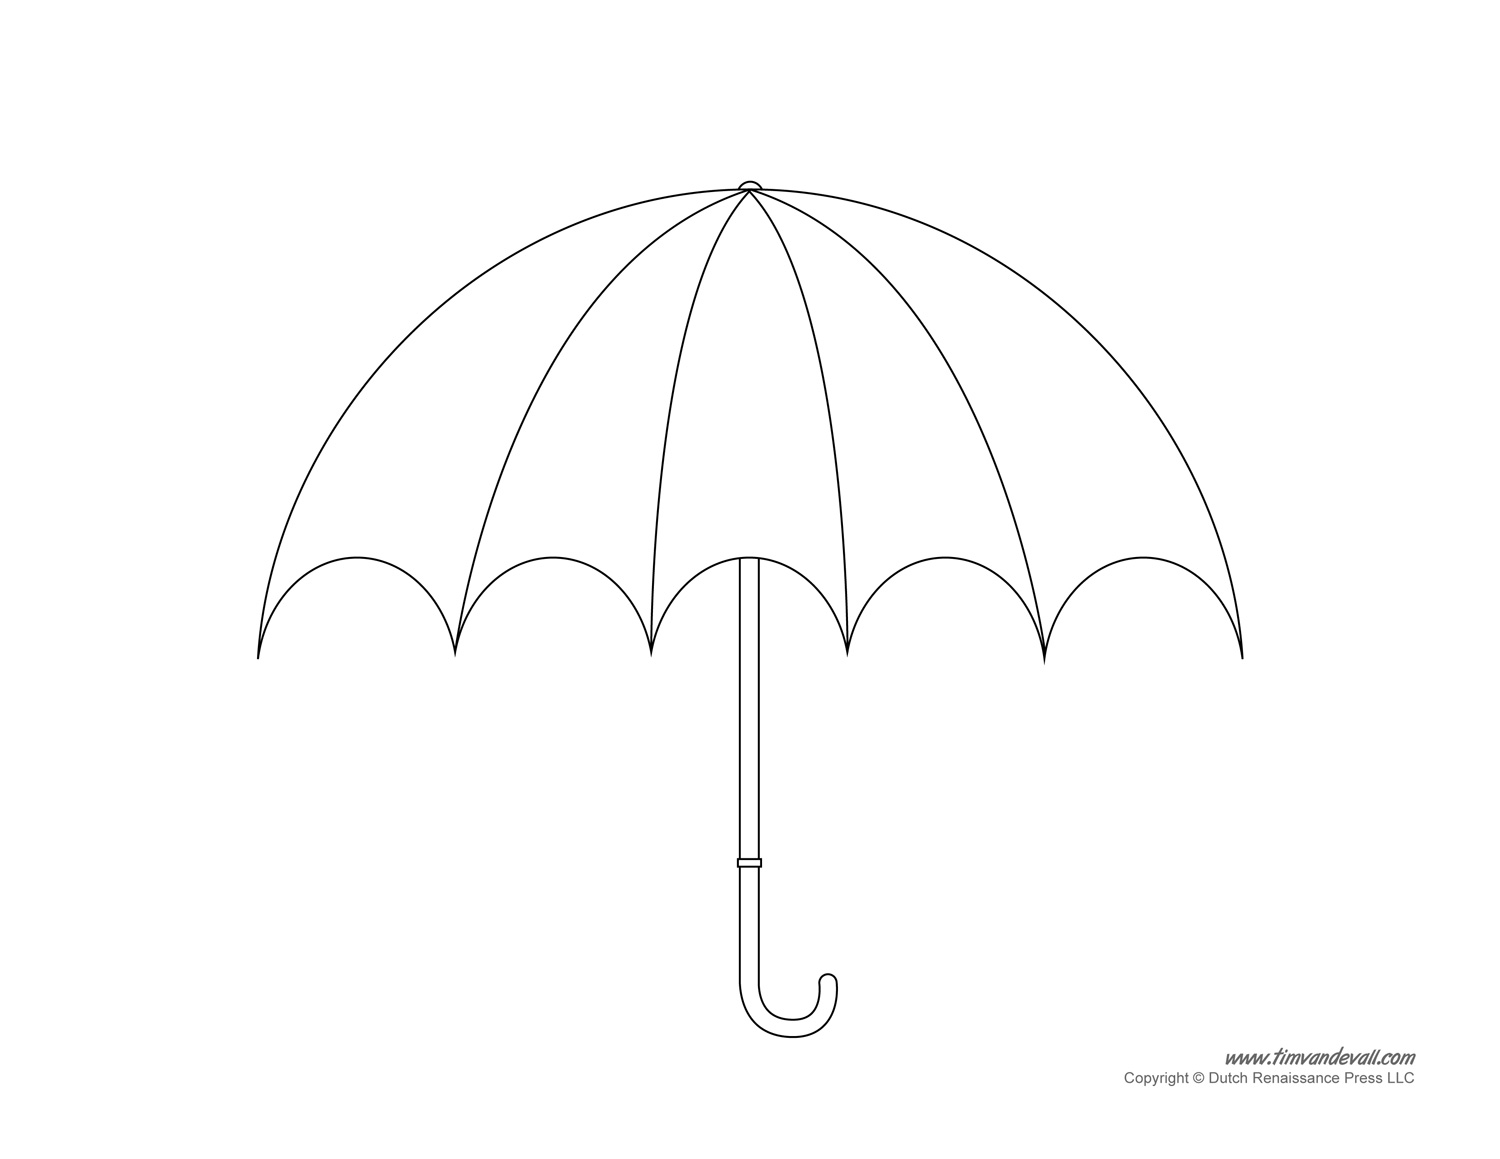 Free Umbrella Diagram Template, Download Umbrella Diagram Template png images, Free ClipArts on Clipart Library